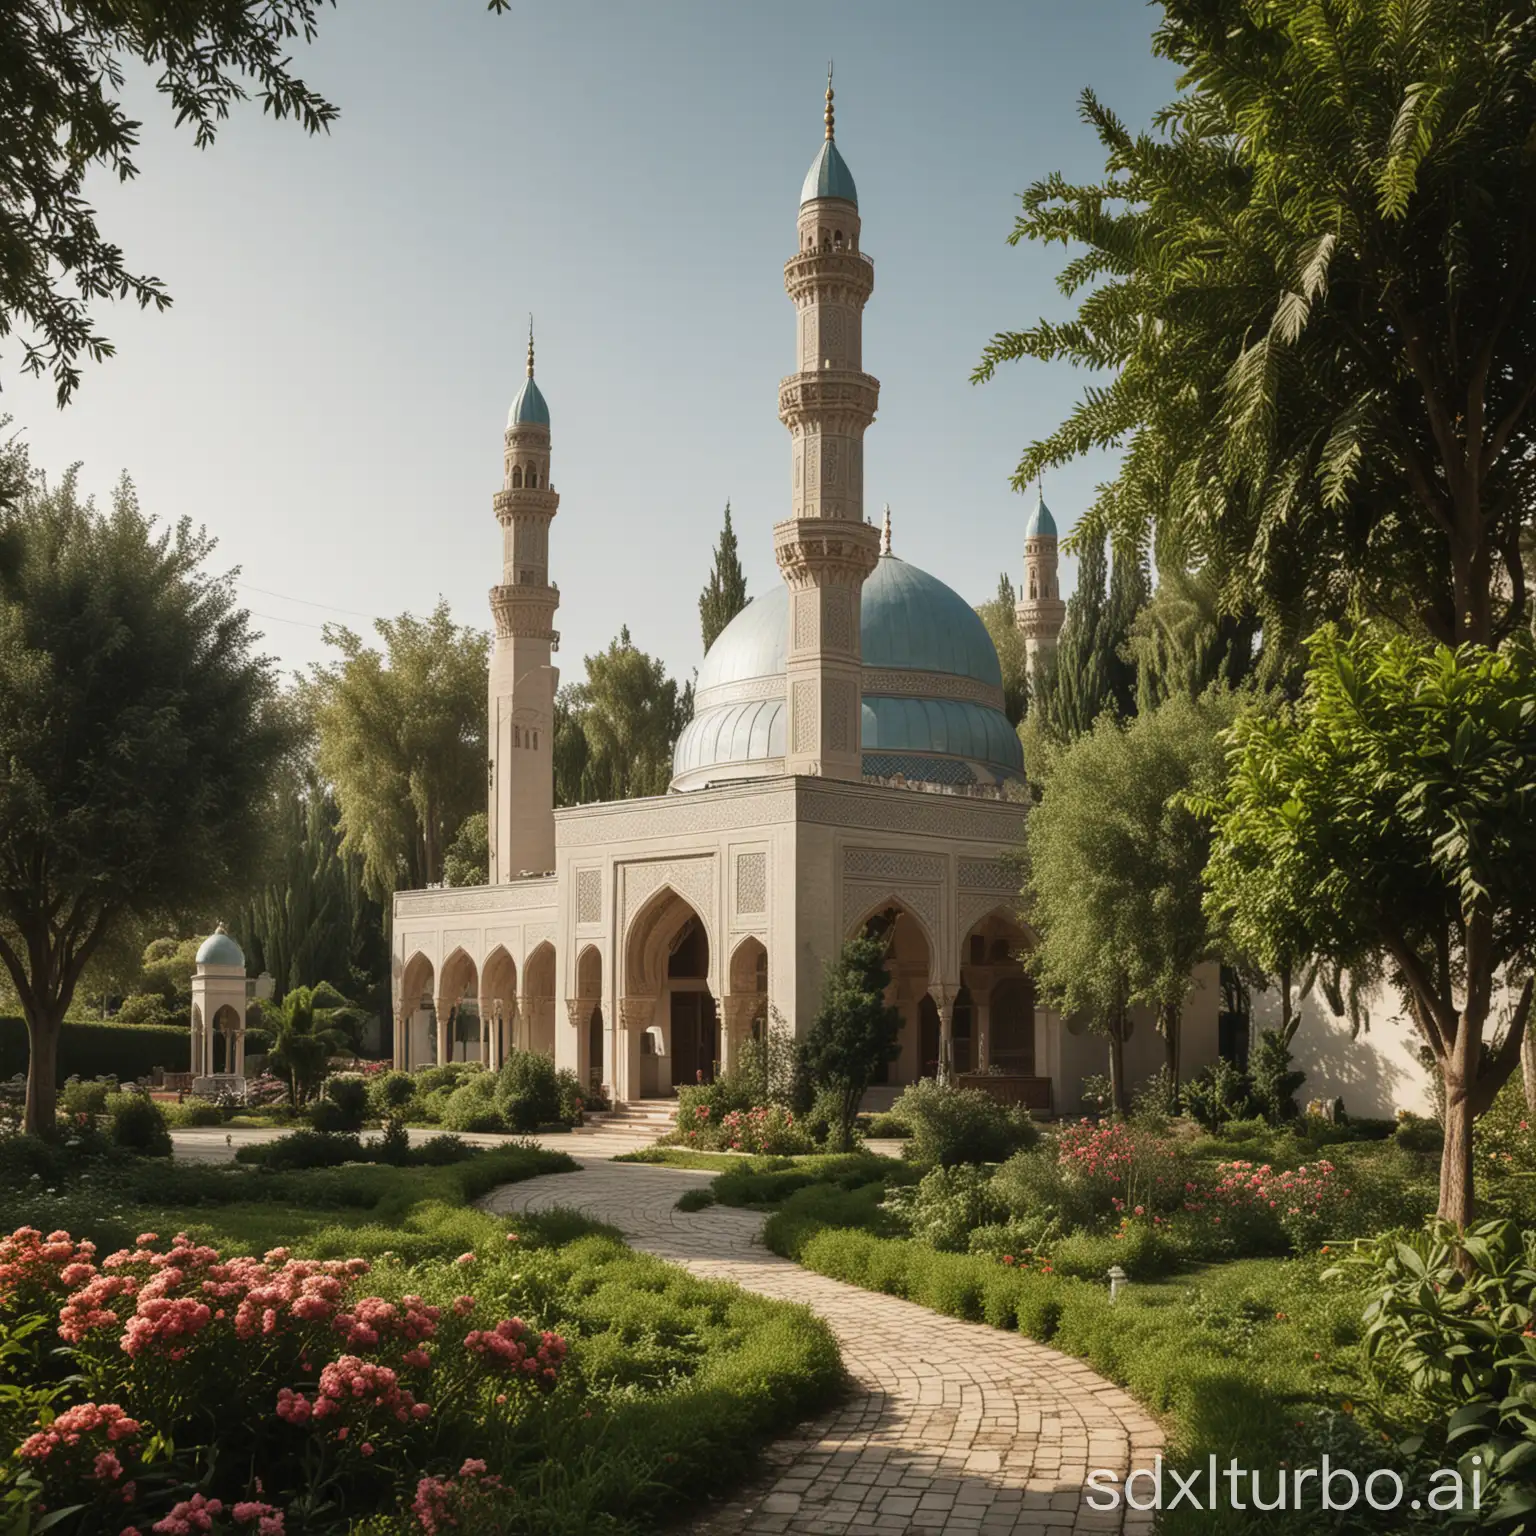 Serene-Mosque-in-a-Garden-Setting